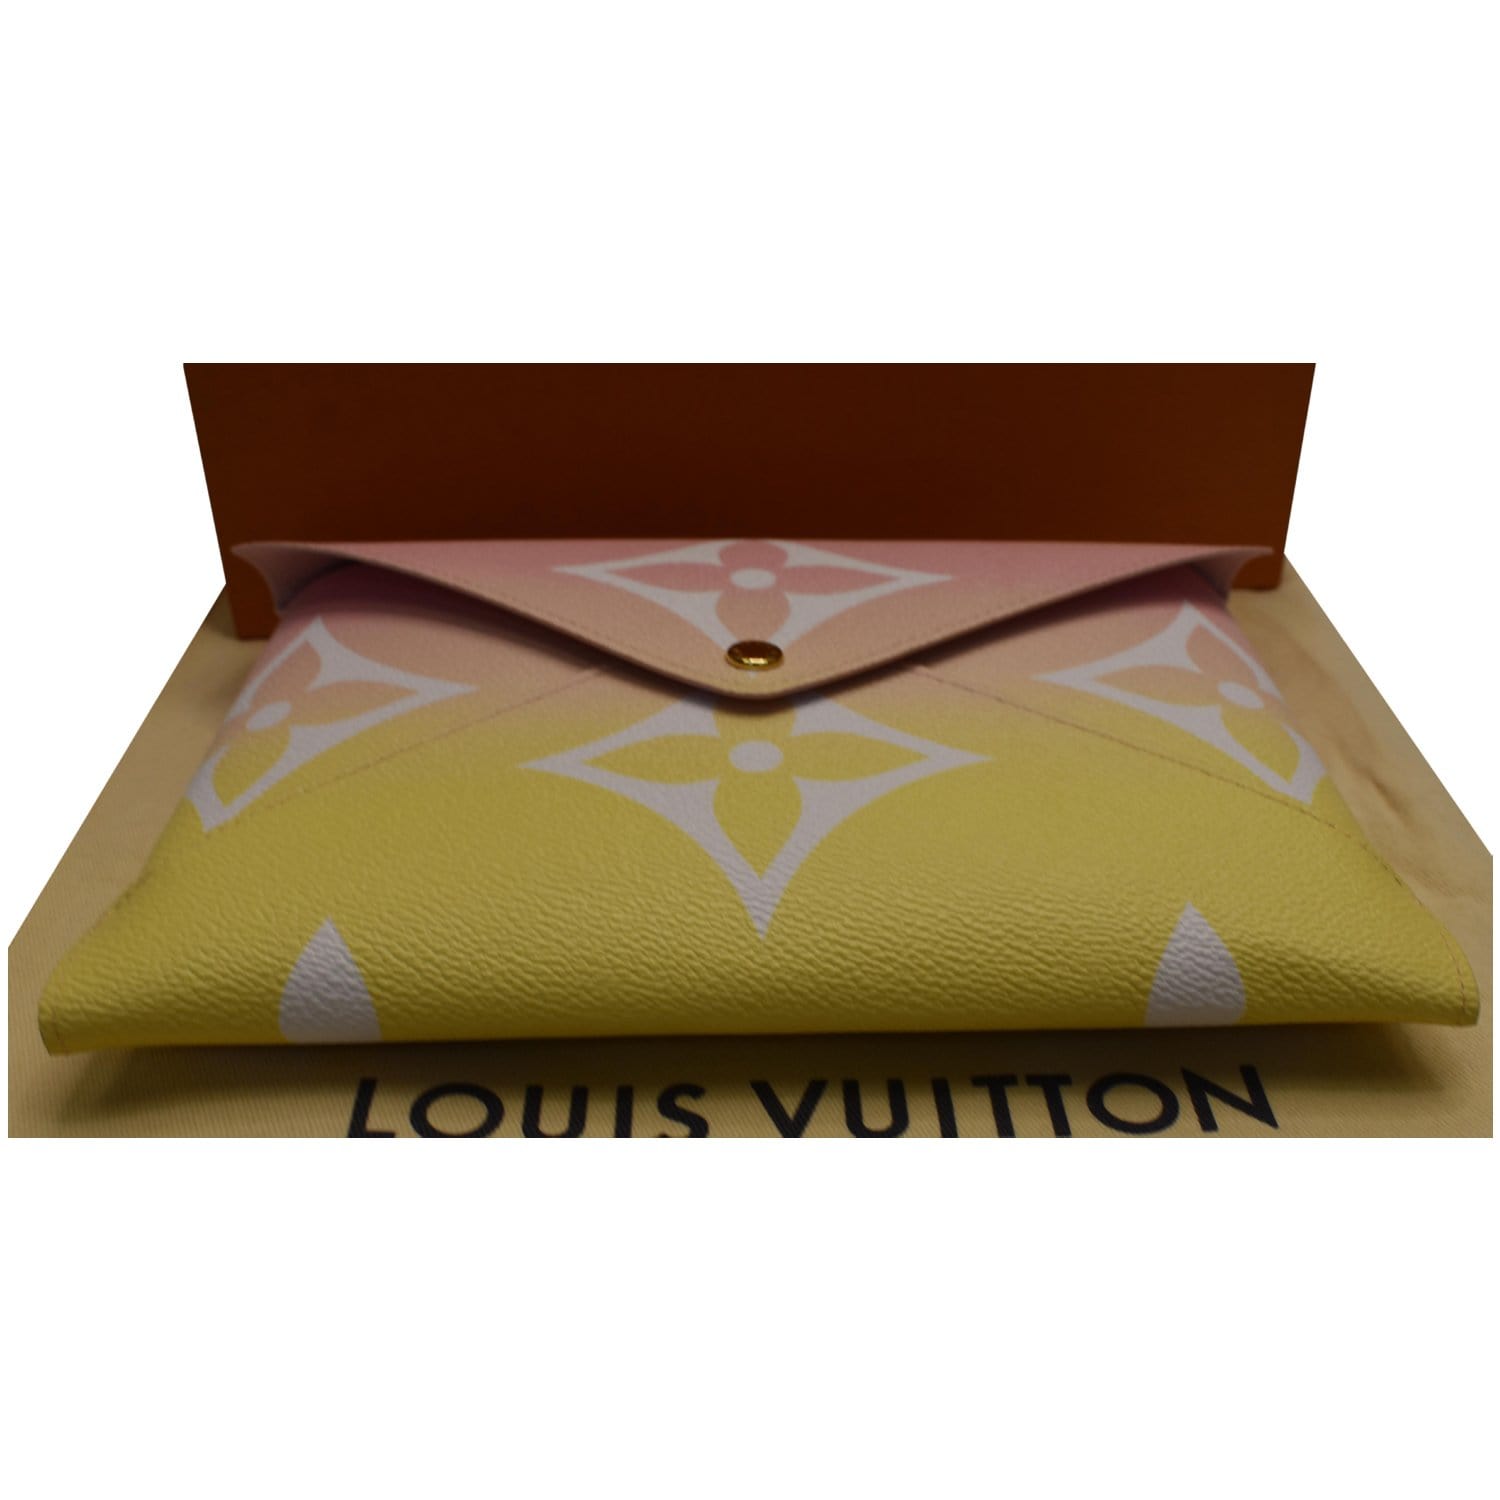 Louis Vuitton Monogram Giant by The Pool Kirigami 3-in-1 Pochette Set